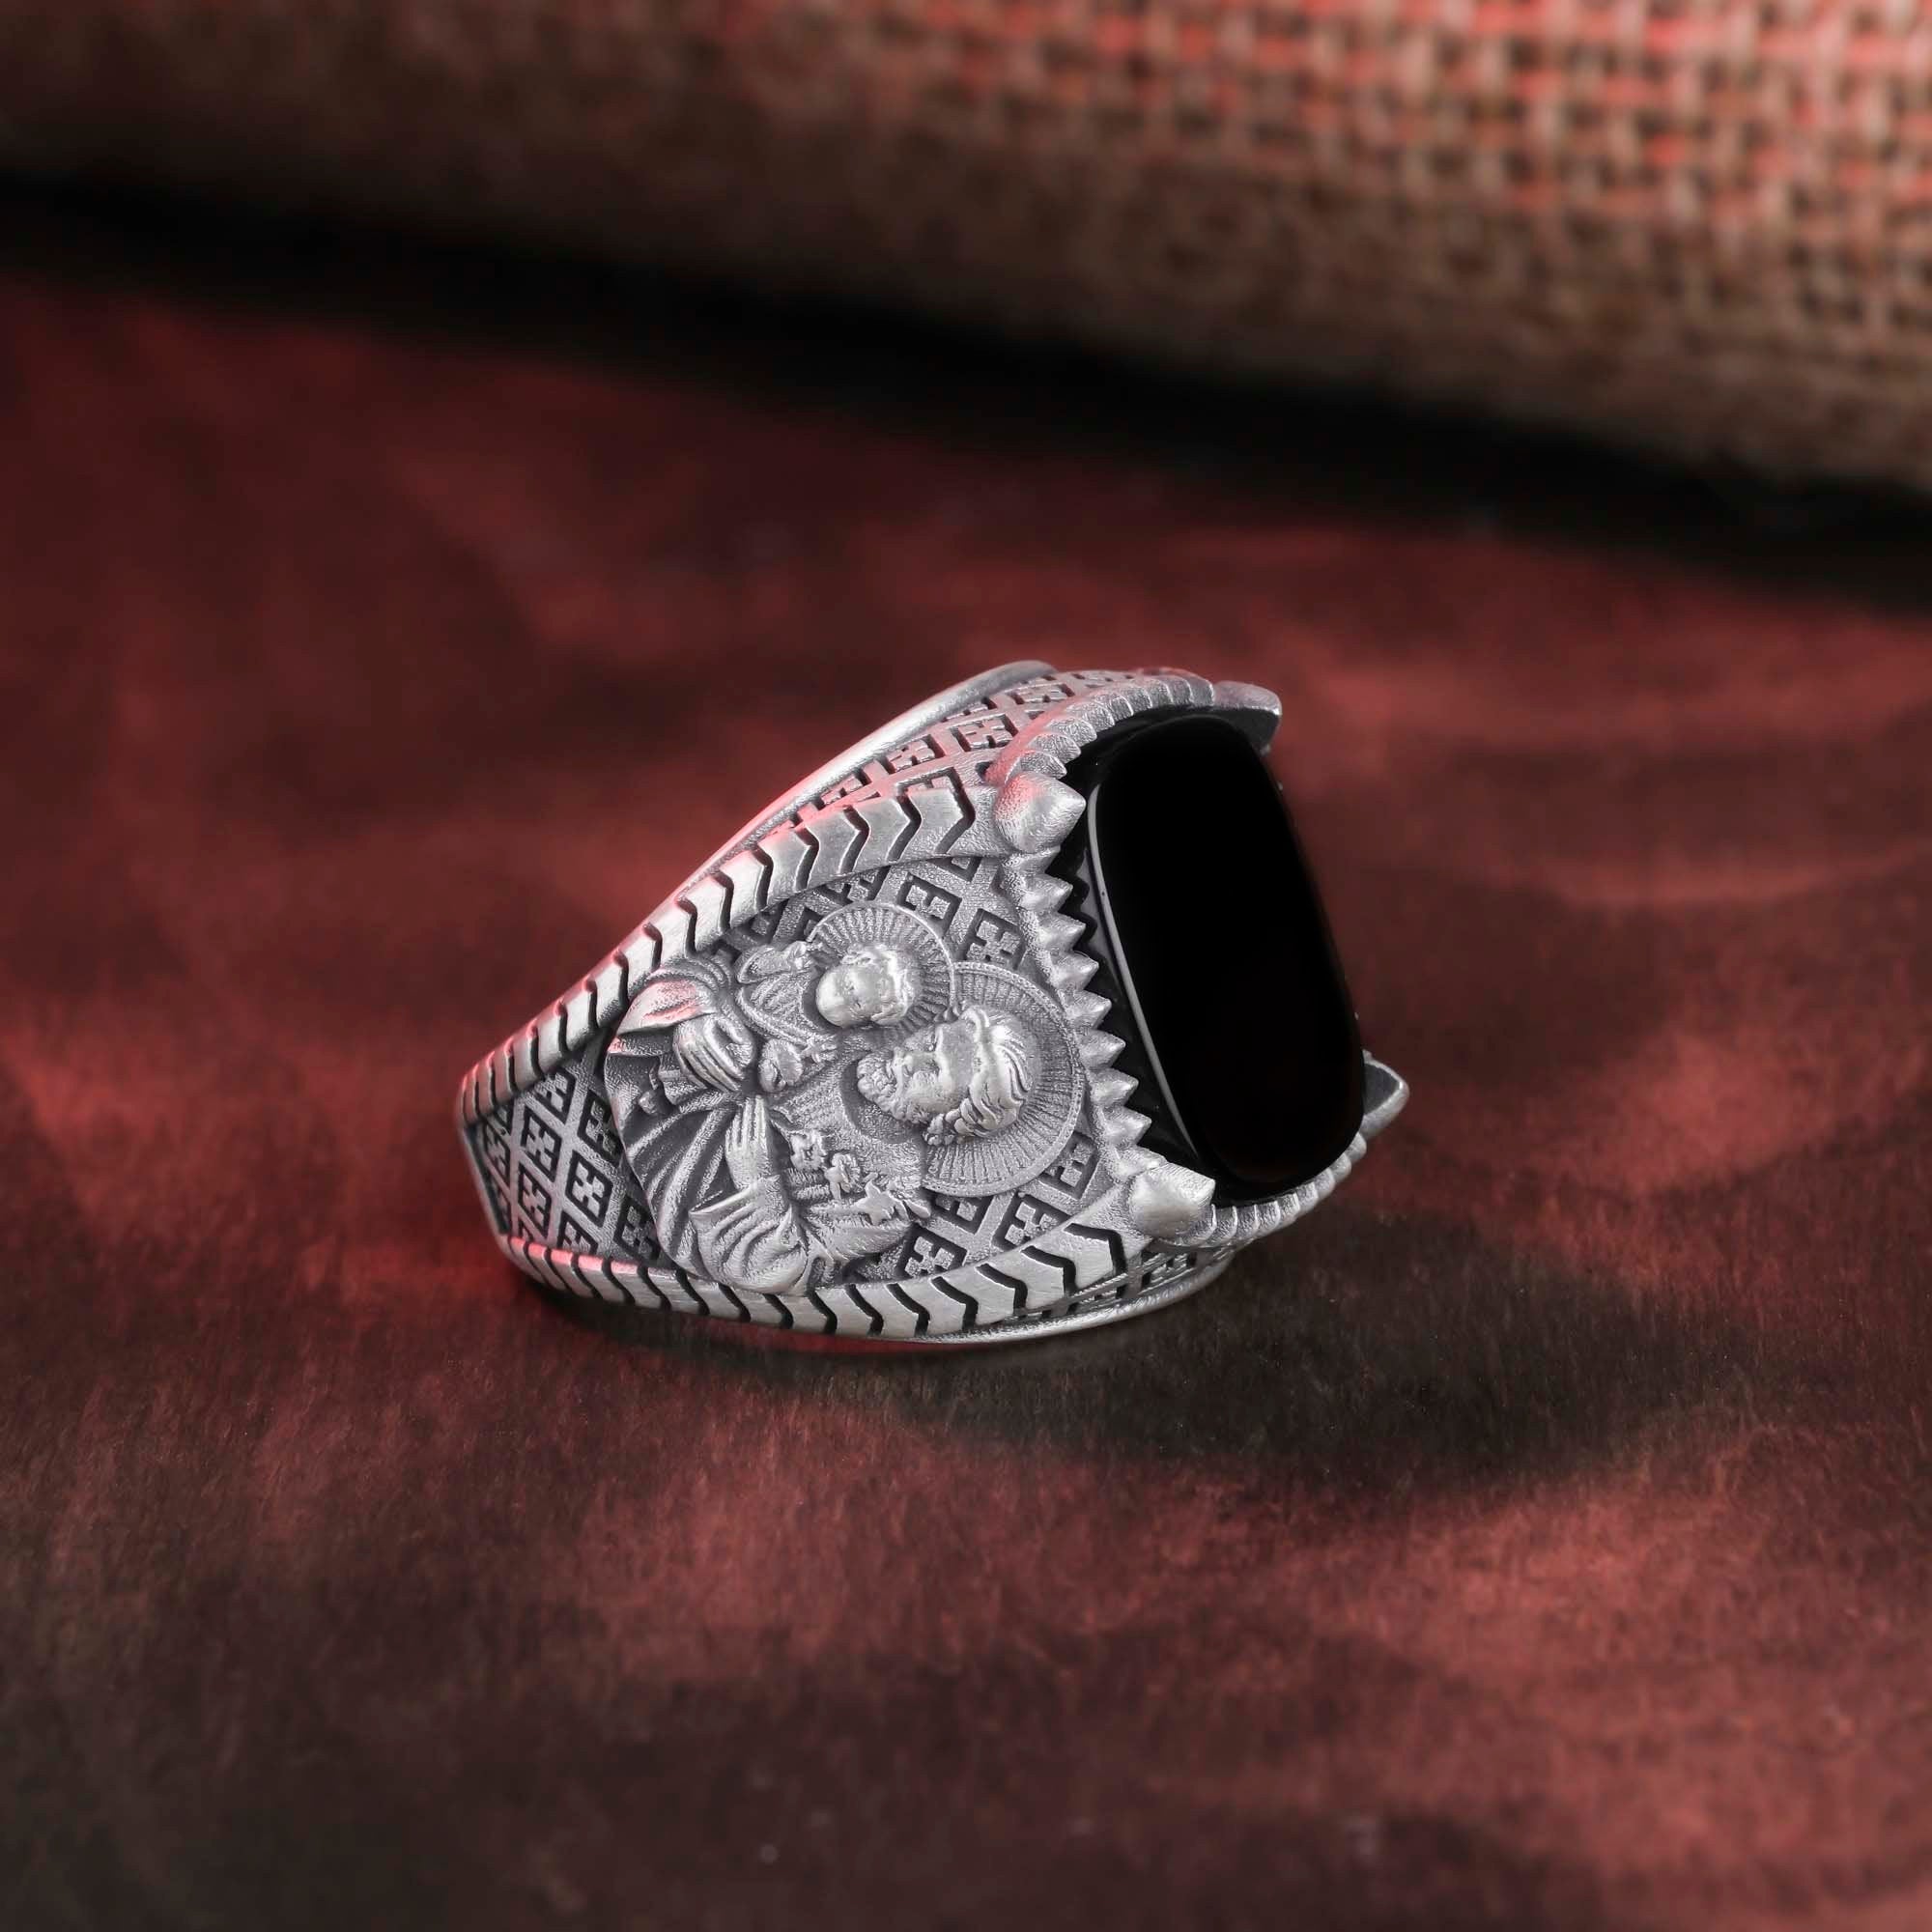 Saint Joseph Ring, Christian Ring, Gemstone Ring, Cushion Gemstone, Cross Pattern Ring, Religious Gift, Spiritual Jewelry, Men's Accessory